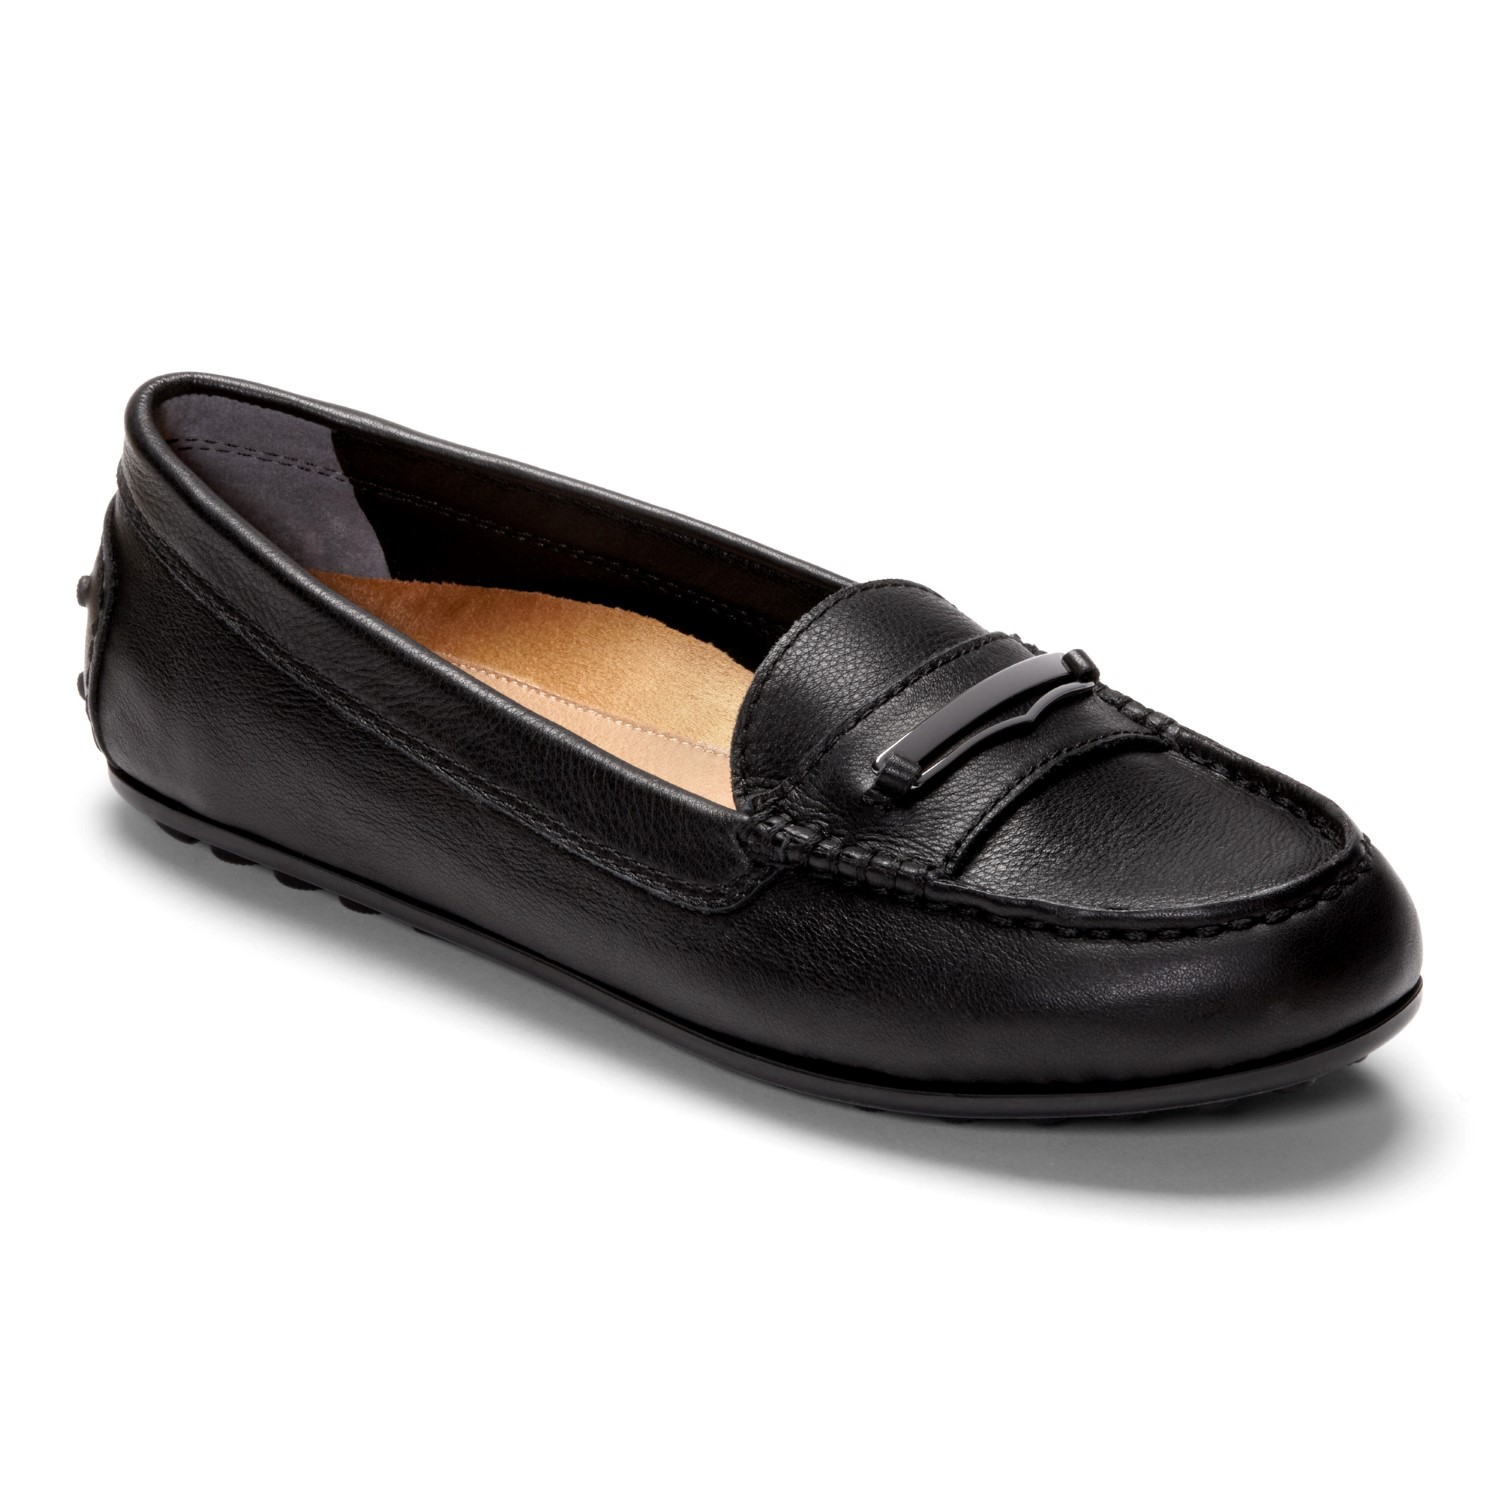 black sparkly flat sandals